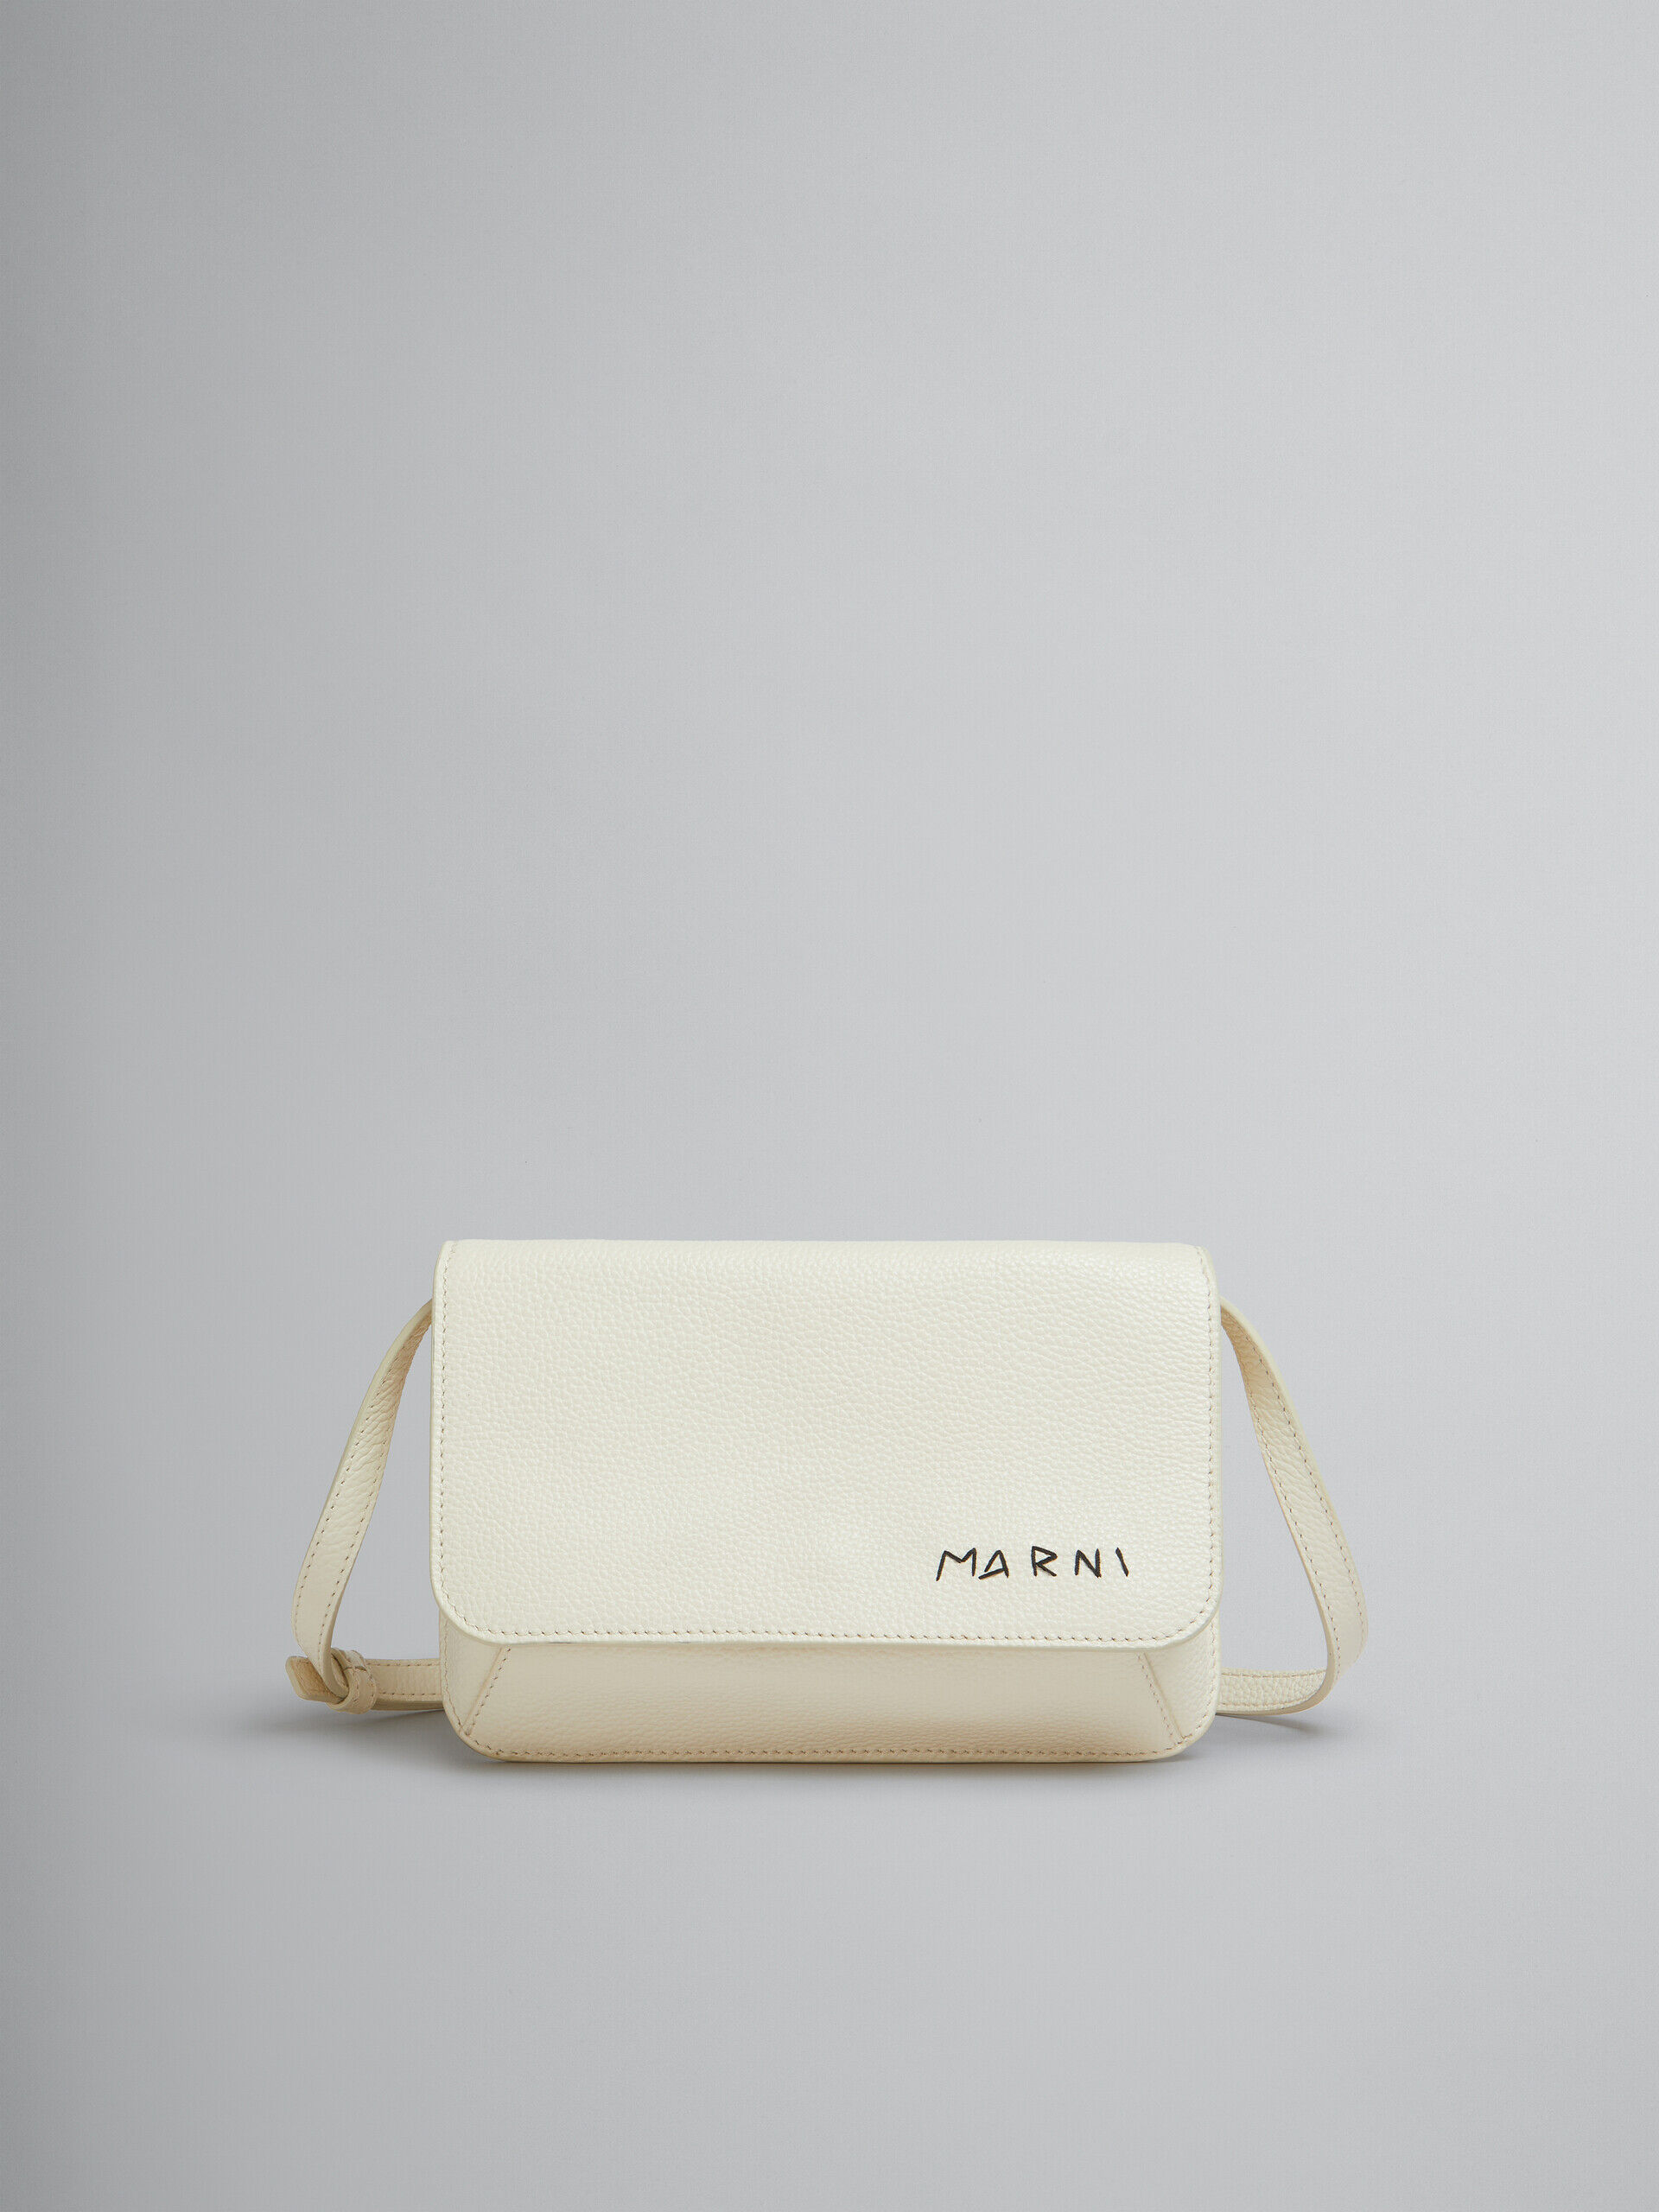 Ivory leather shoulder bag with Marni mending | Marni